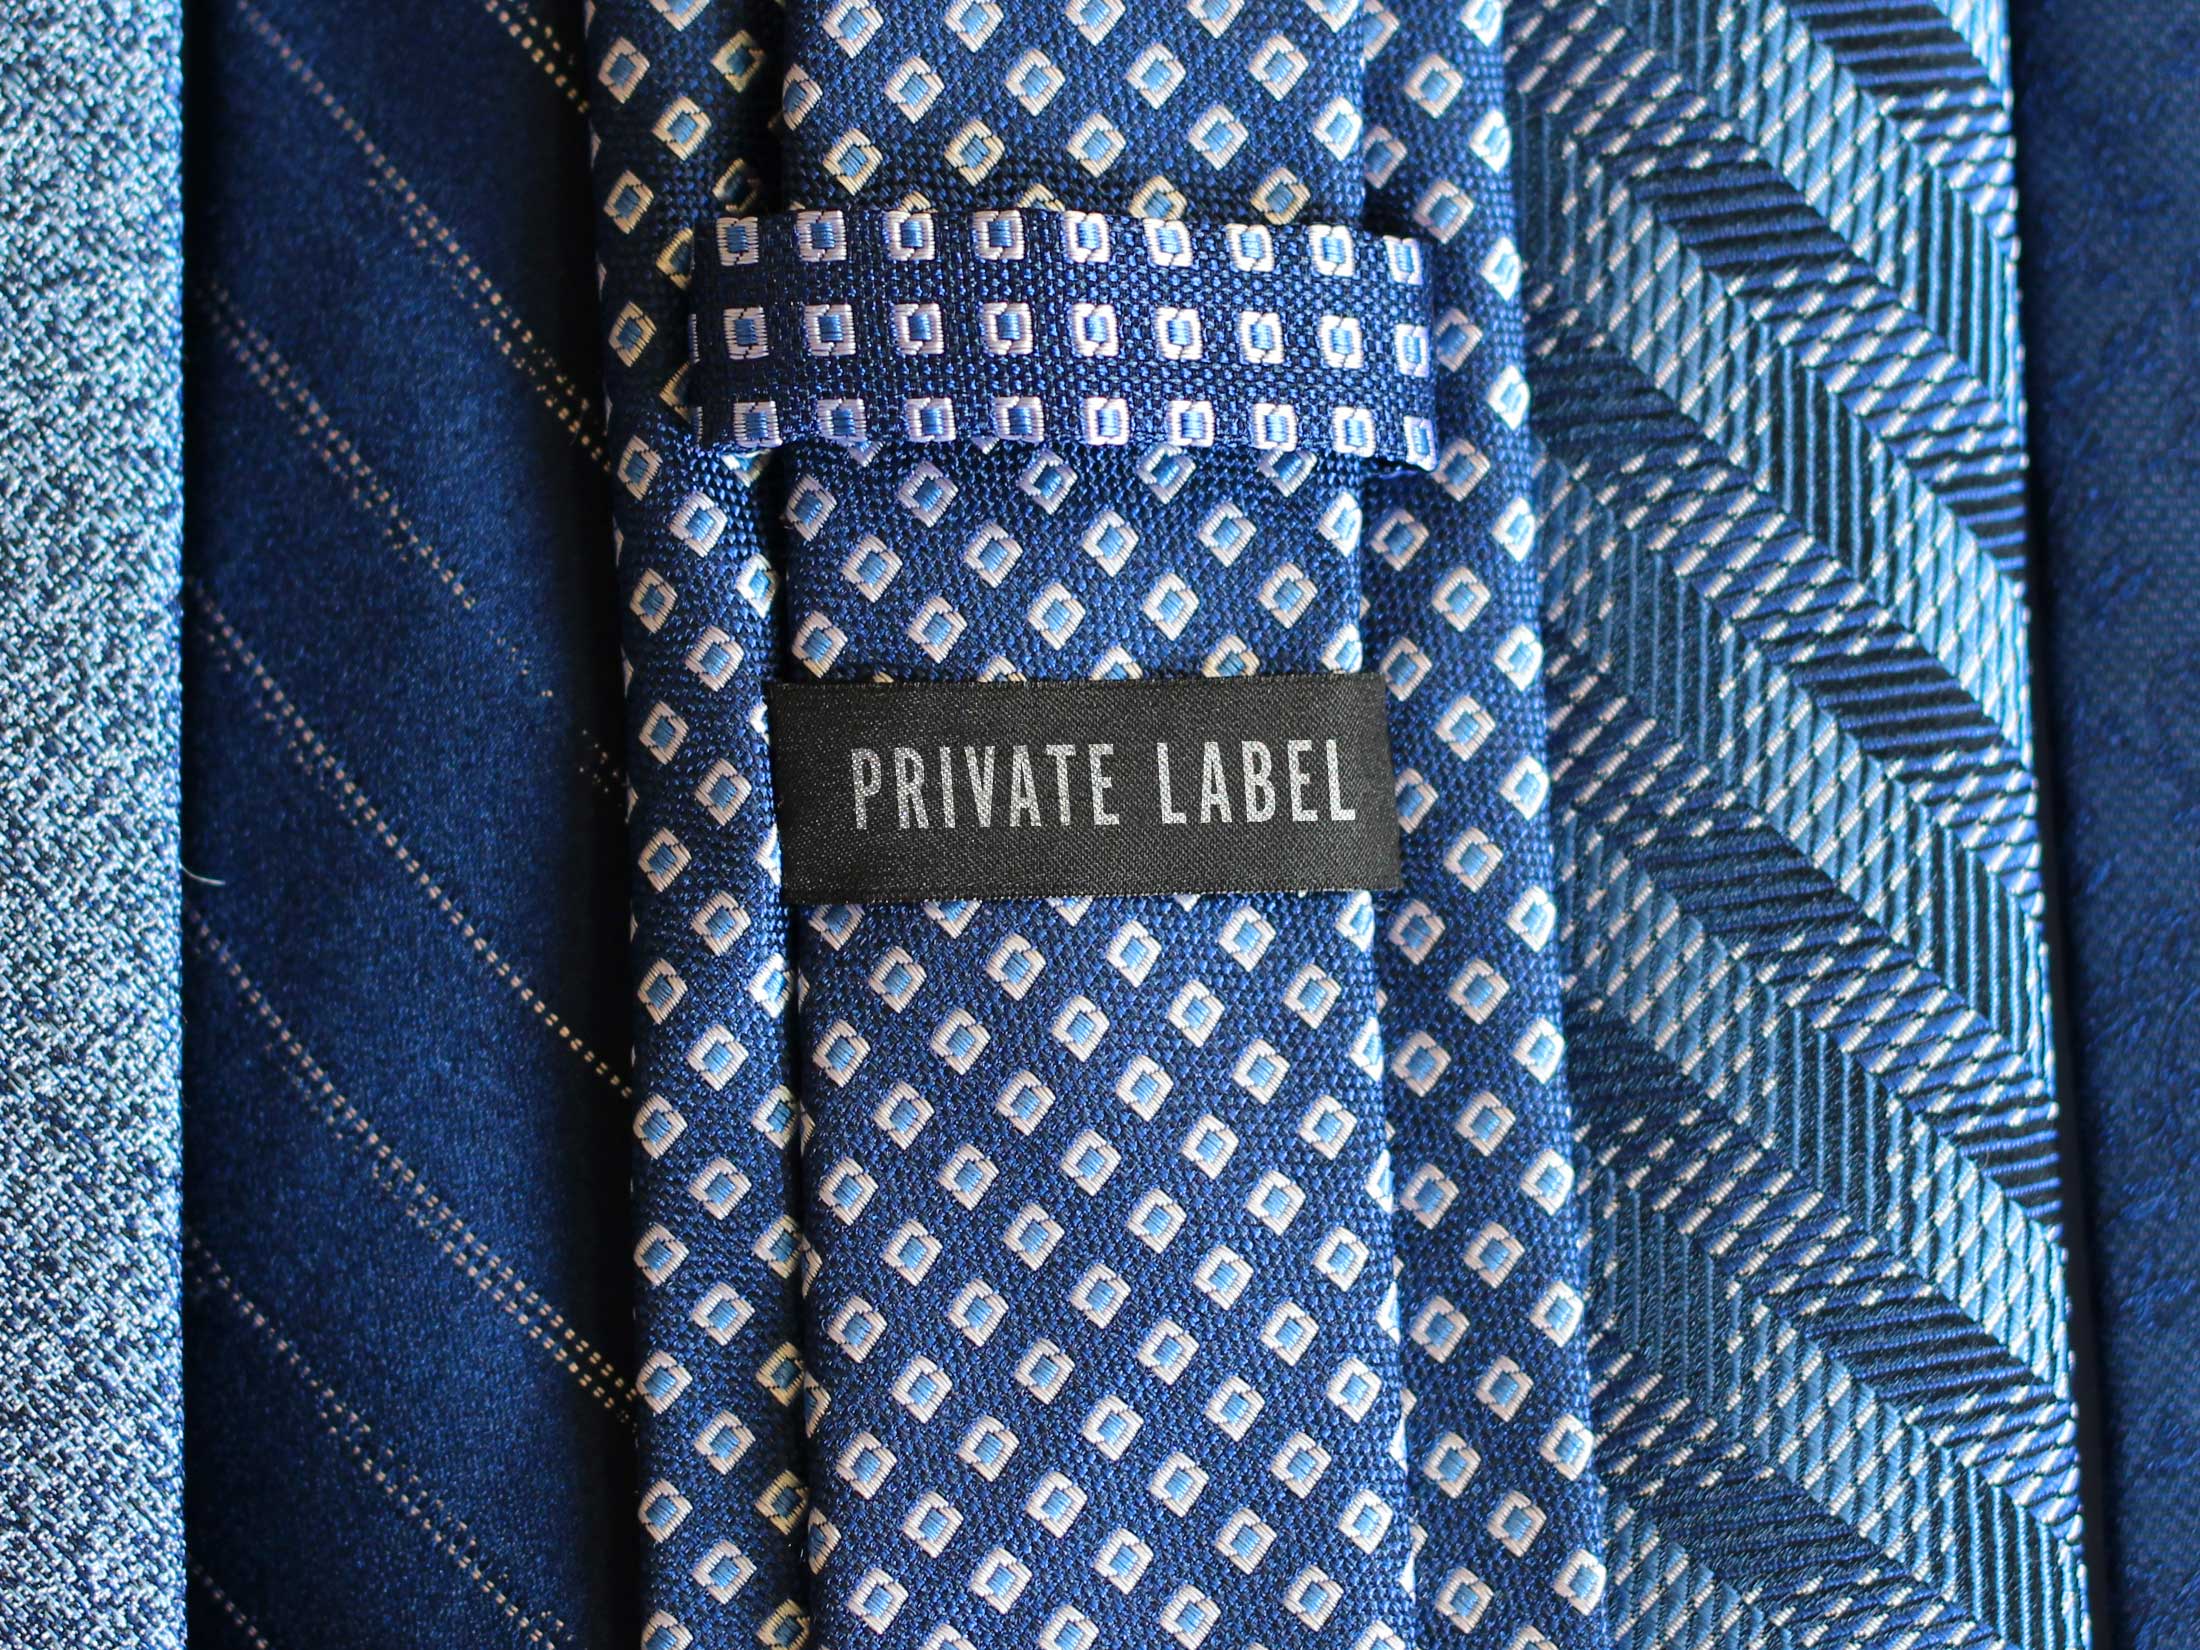 Bespoke-Fashion-Brands-Private Label.jpg